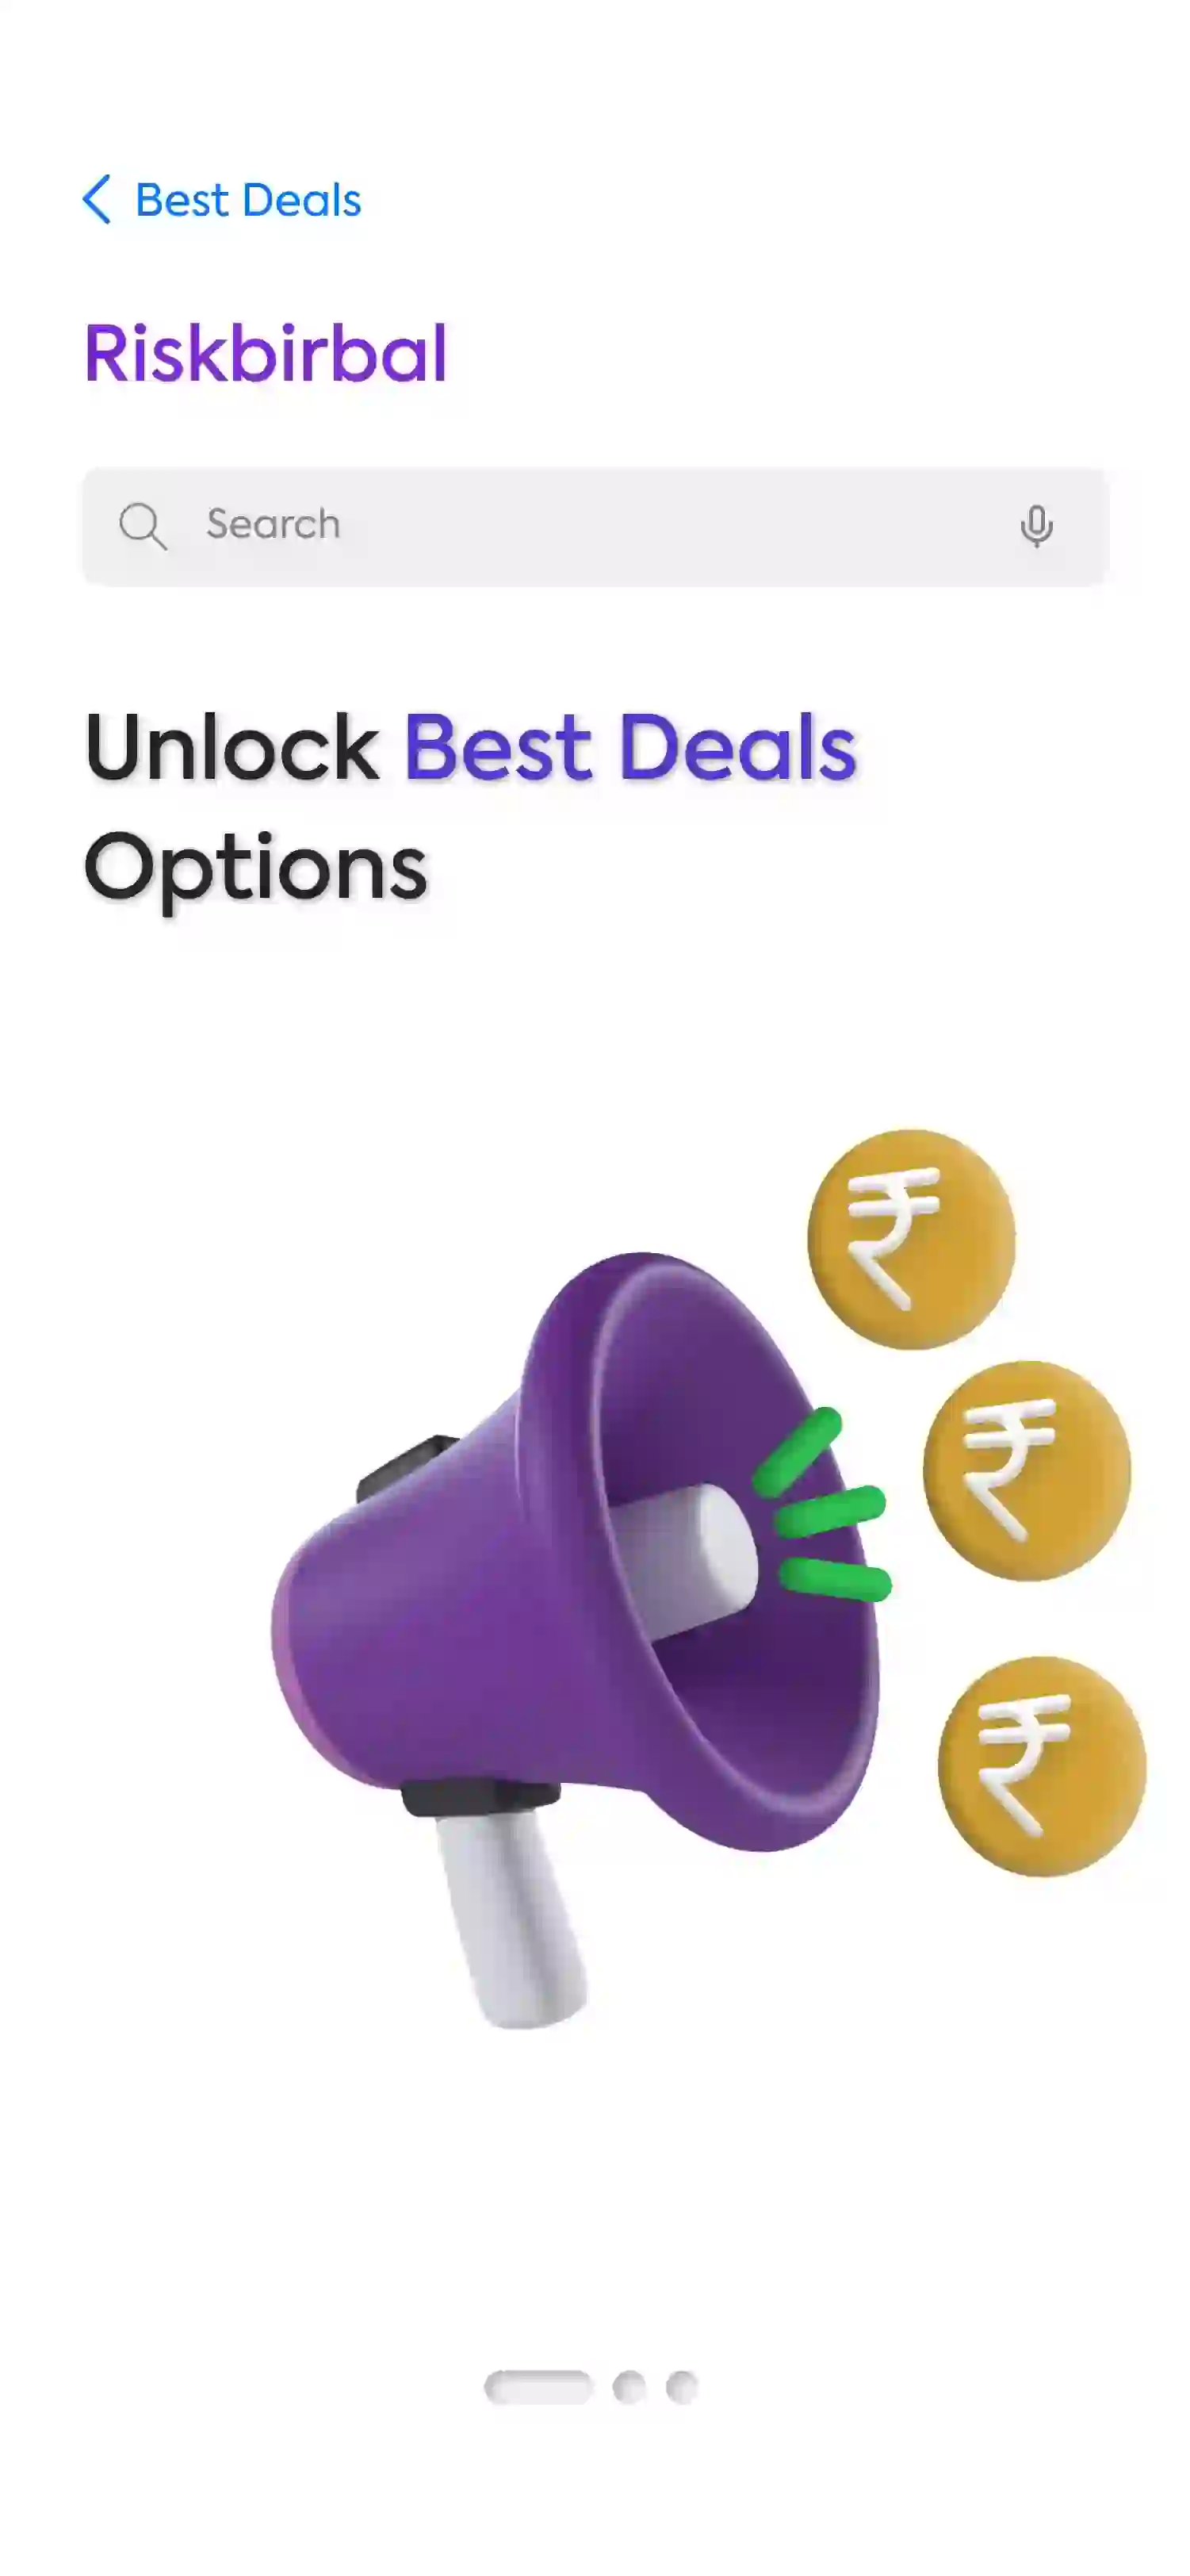 Unlock Best Deals Options